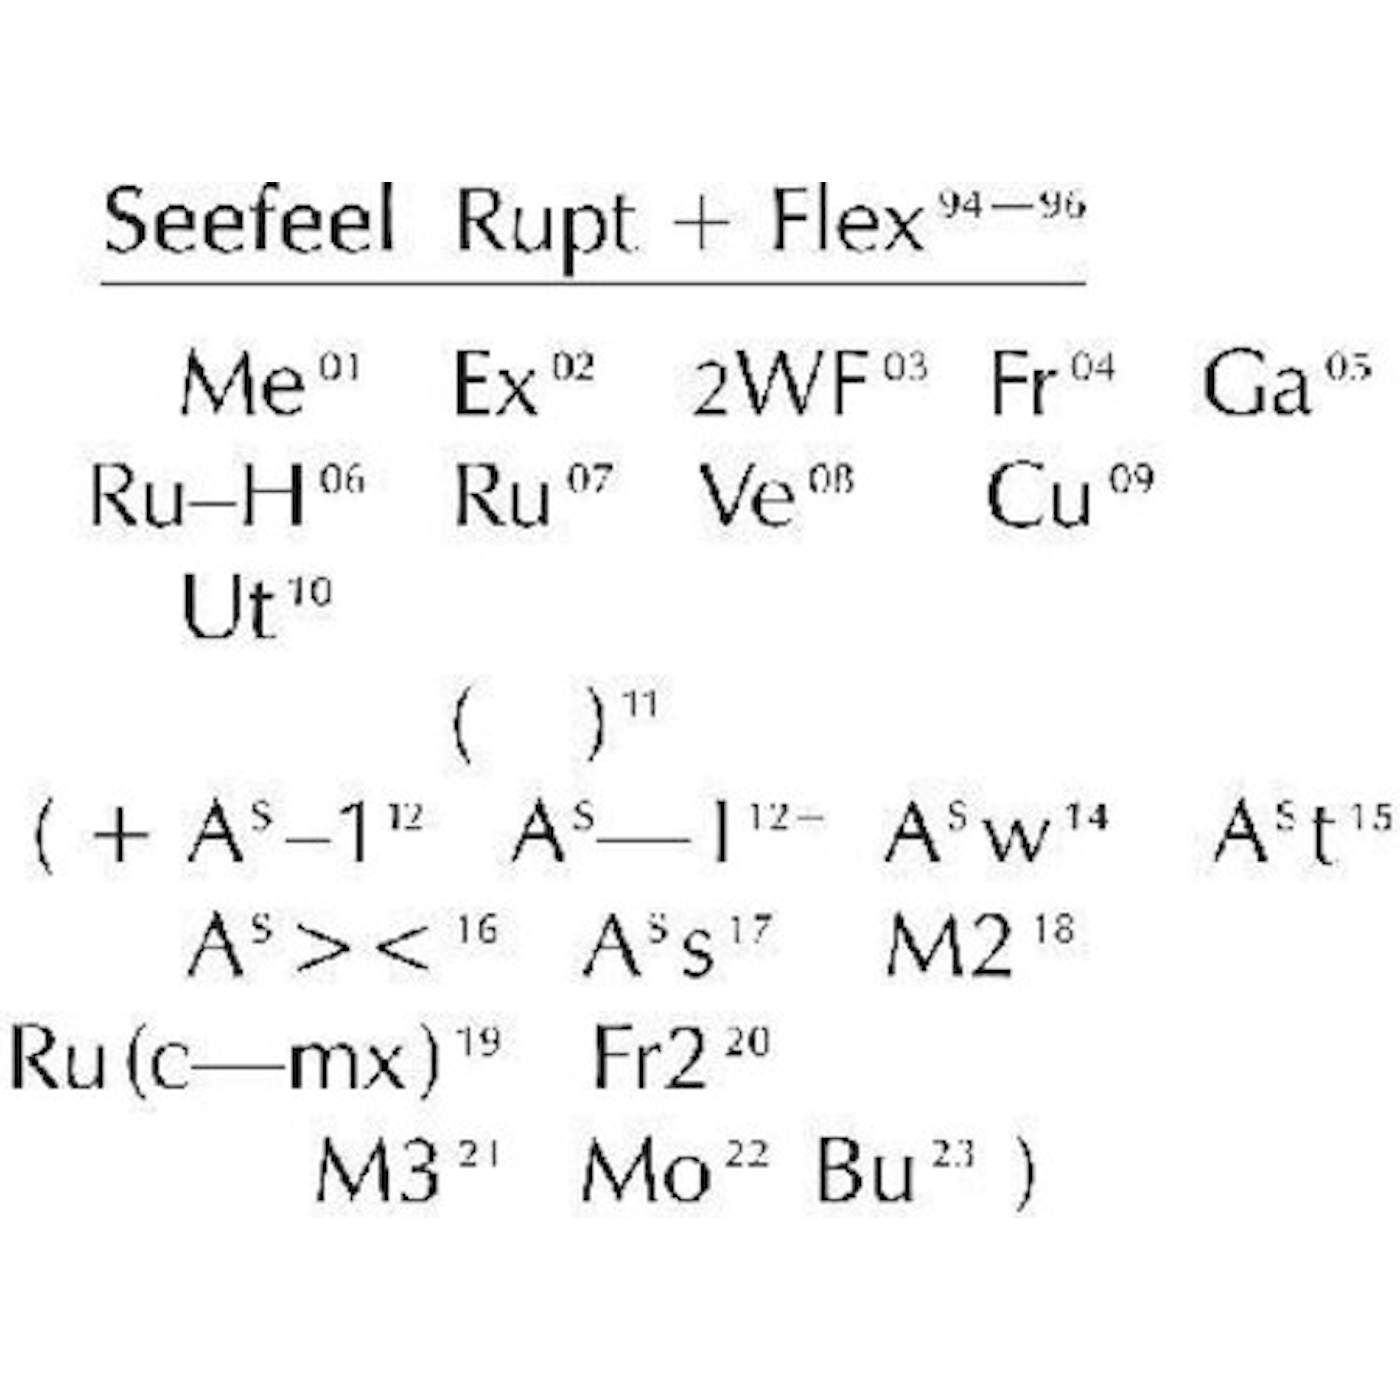 Seefeel RUPT & FLEX (1994-96) CD